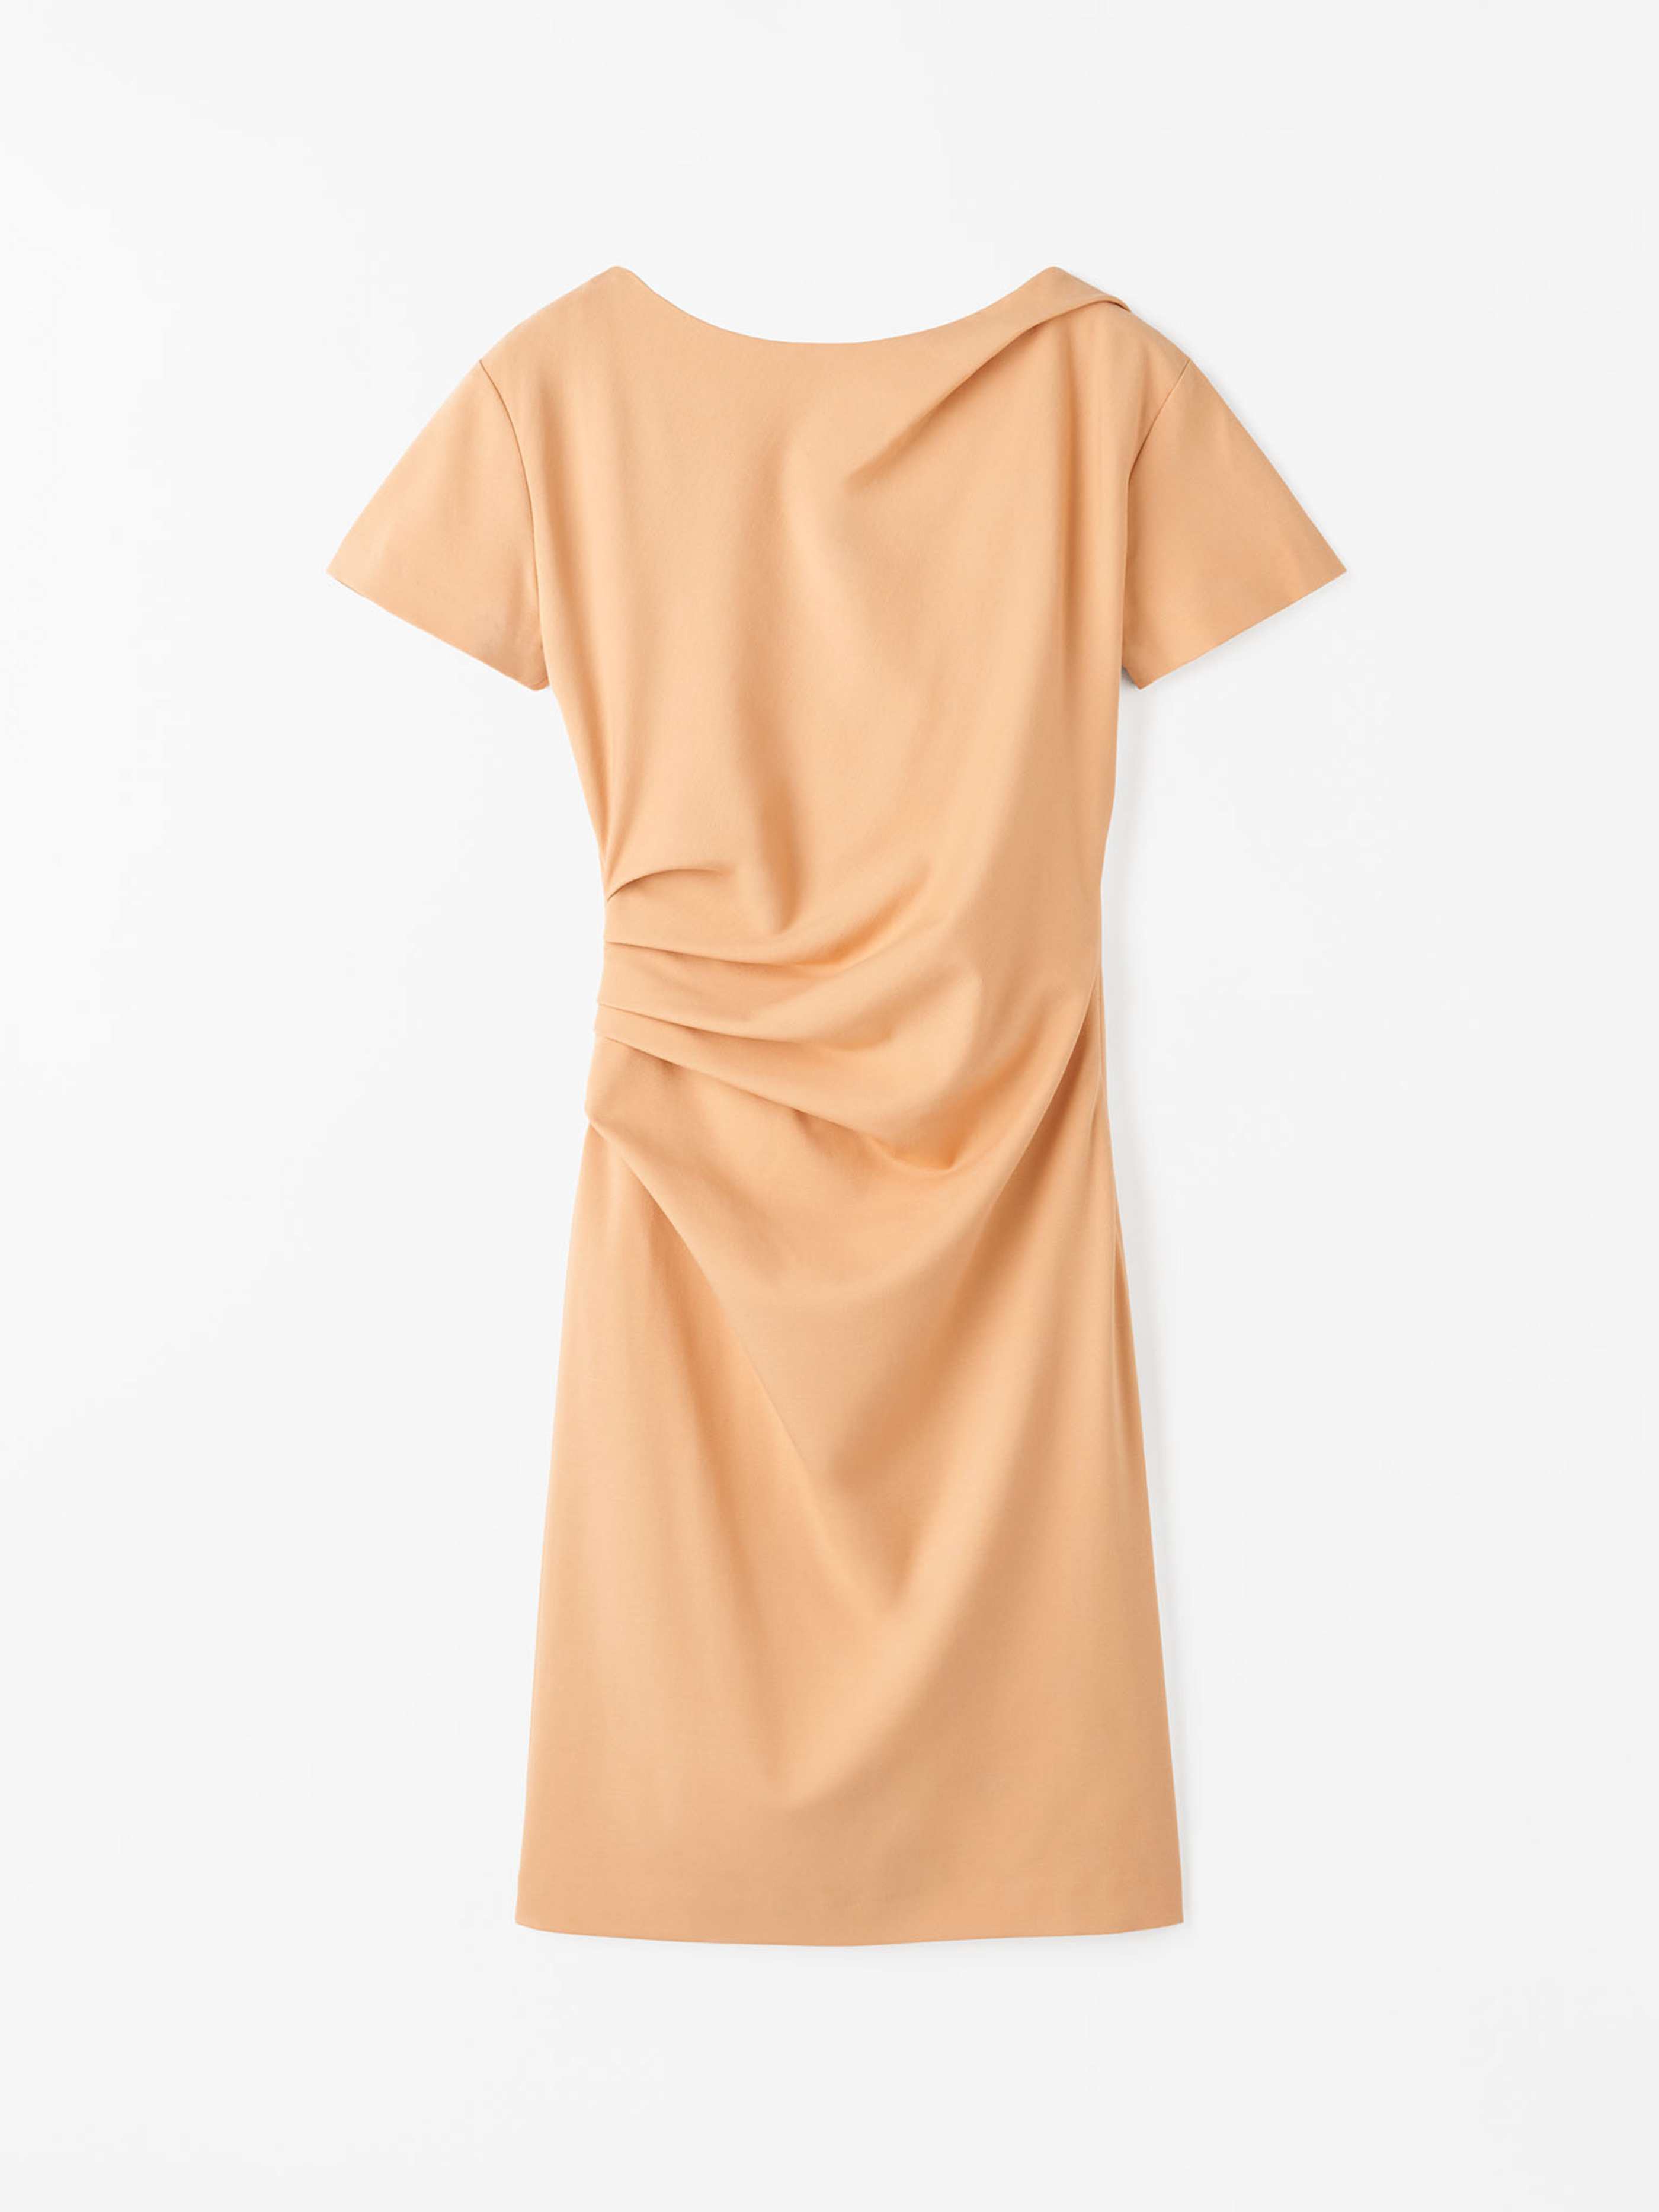 Izlo S Dress - Buy Dresses